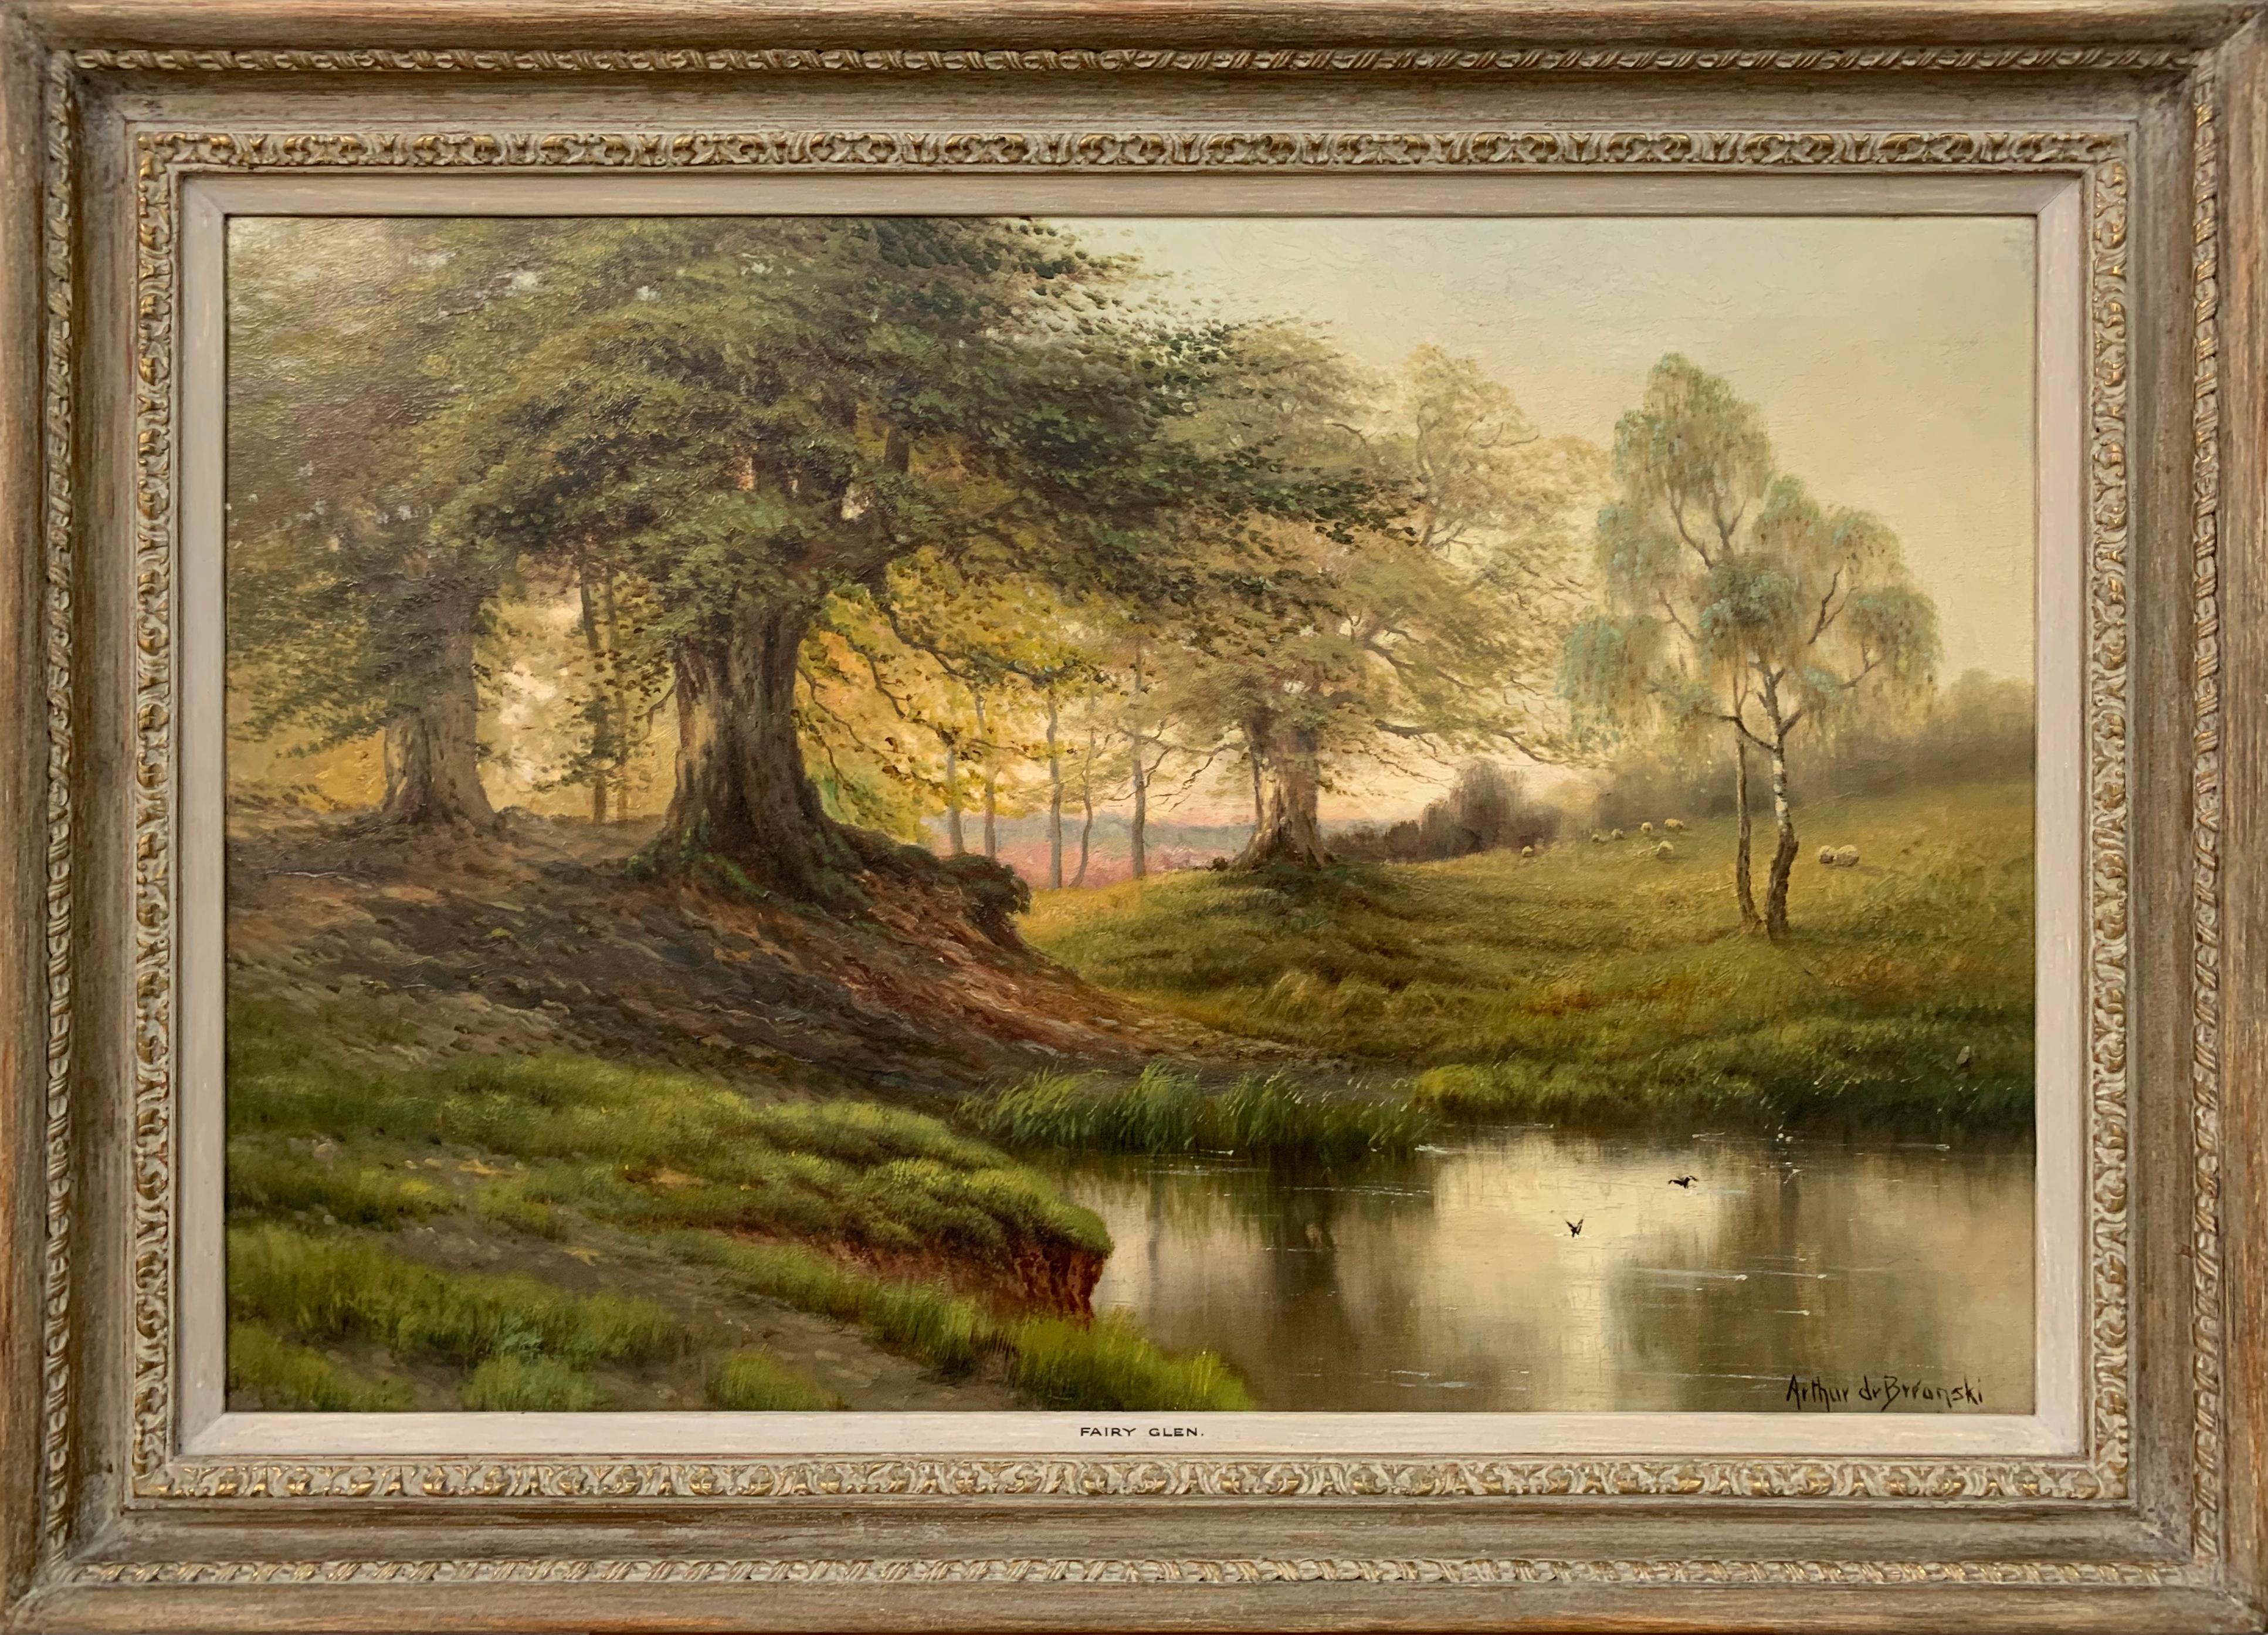 Arthur de Breanski Landscape Painting - English River Sunset Landscape Oil Painting with Trees, Birds, Fields & Sheep